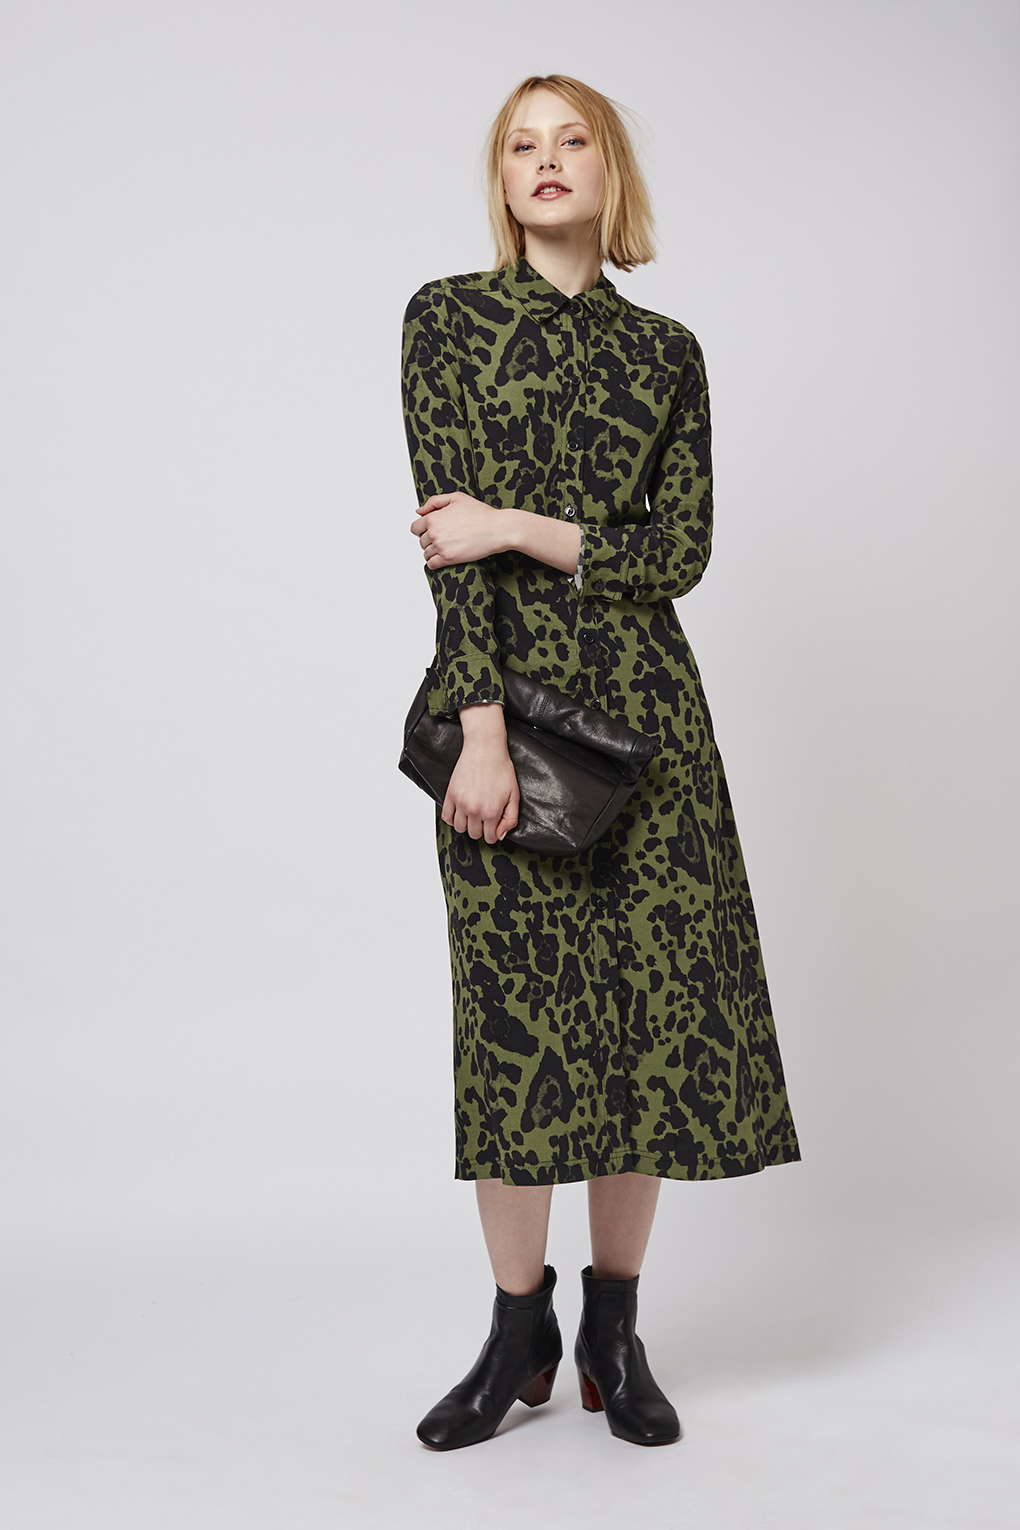 topshop green leopard print dress